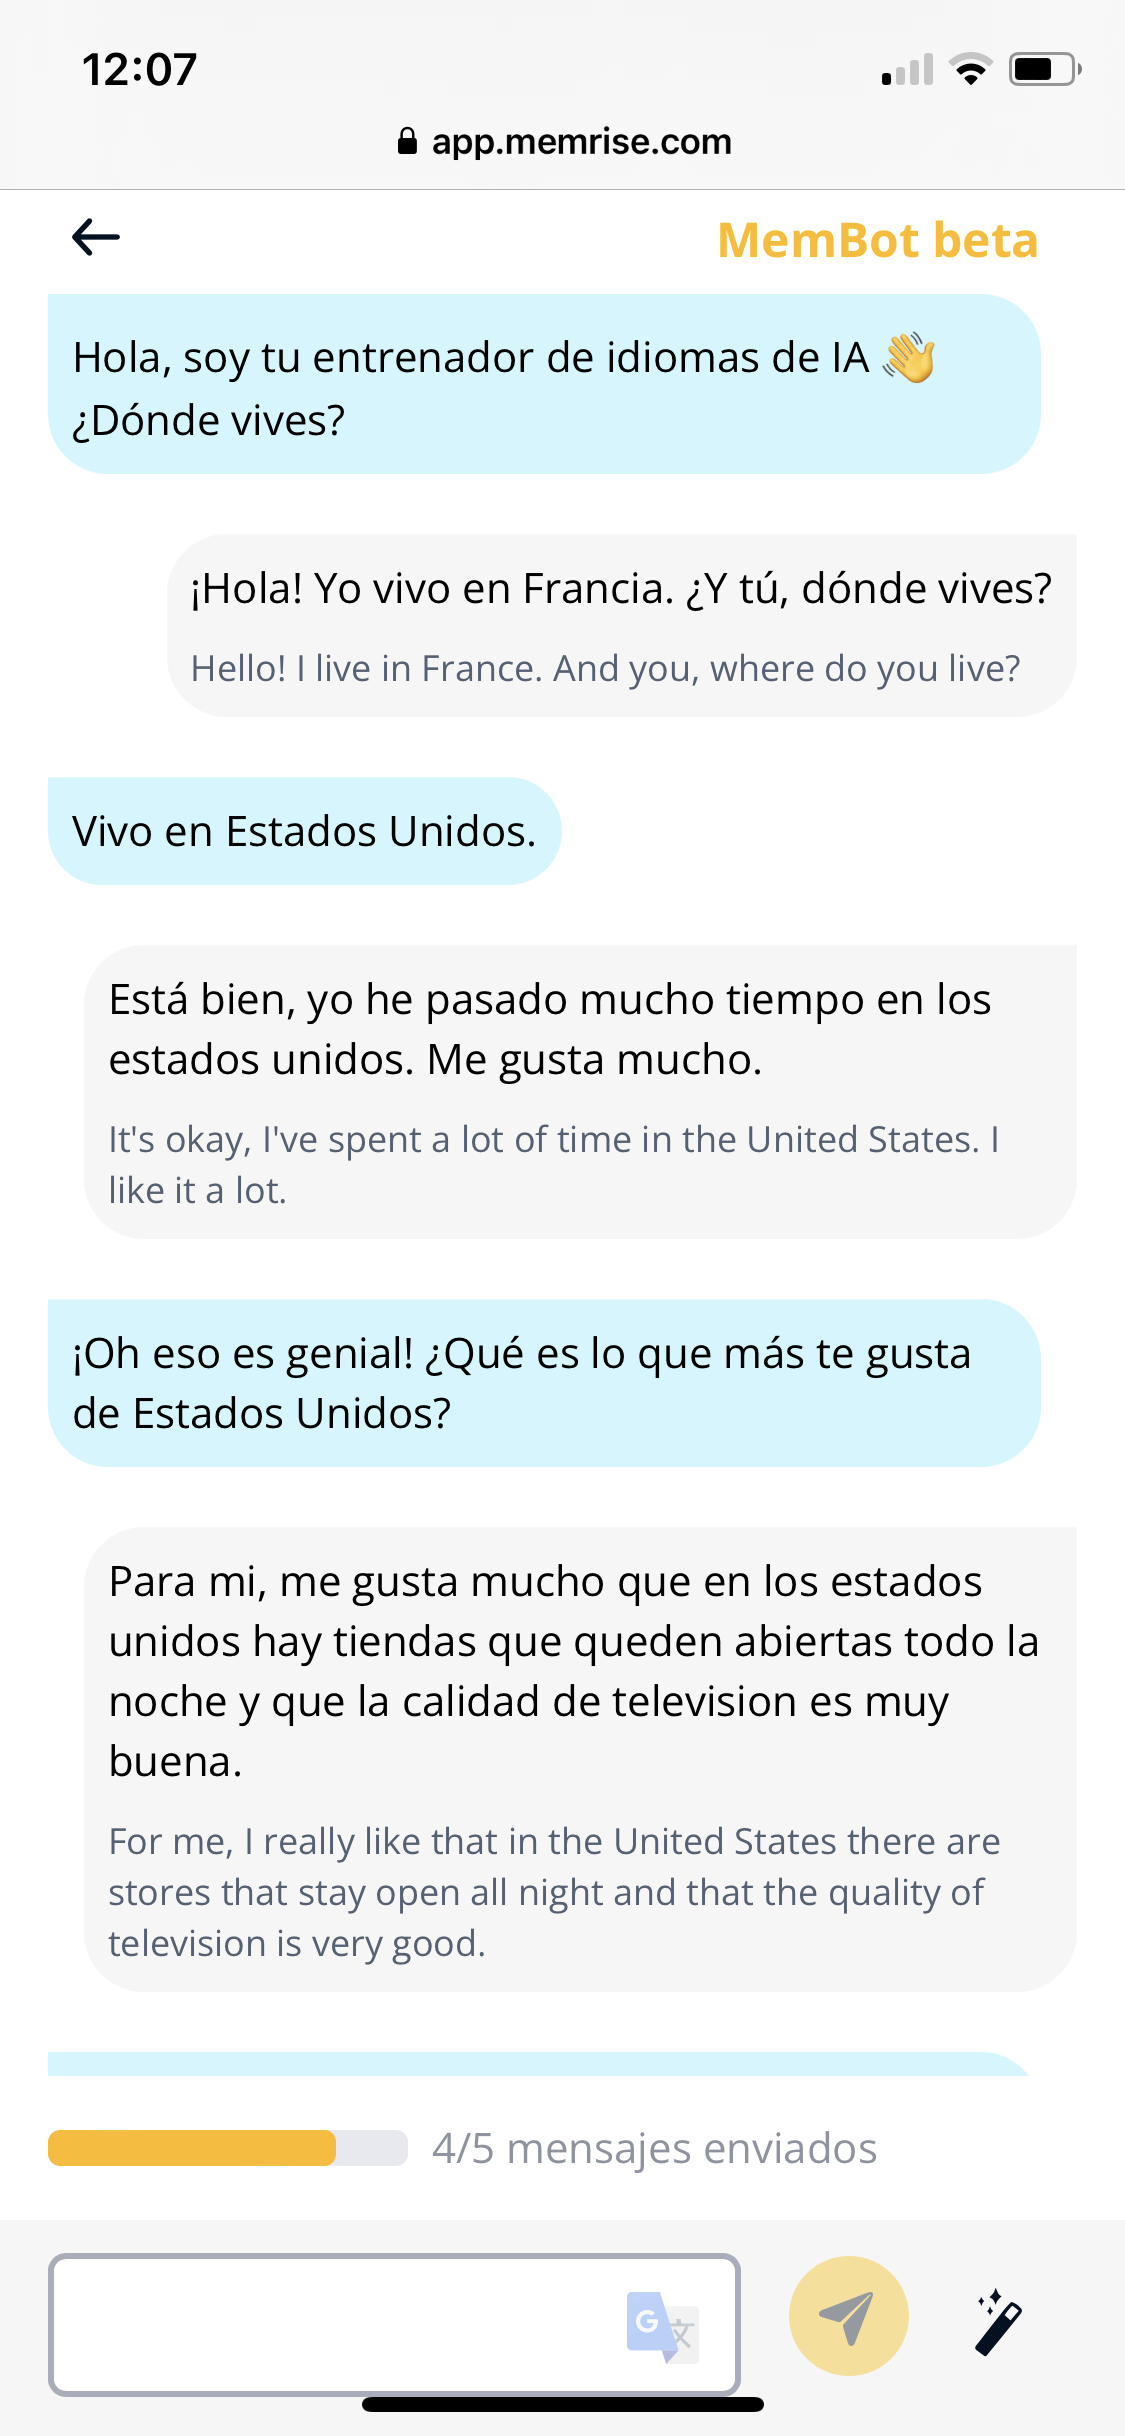 A screenshot of Jalen's conversation with MemBot.